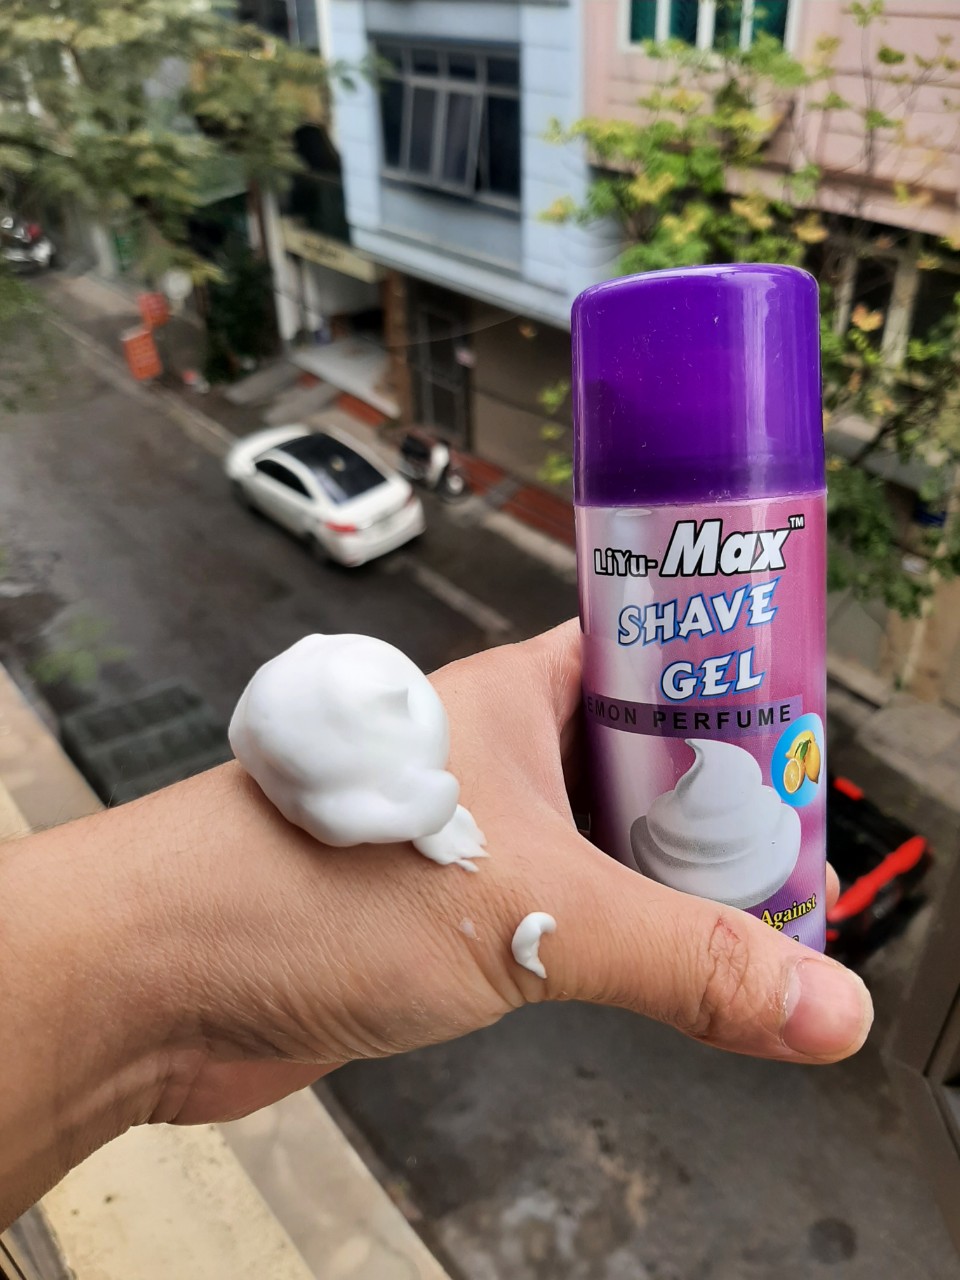 Bọt cạo râu Max Shaving Foam 110ml dưỡng da mềm mịn